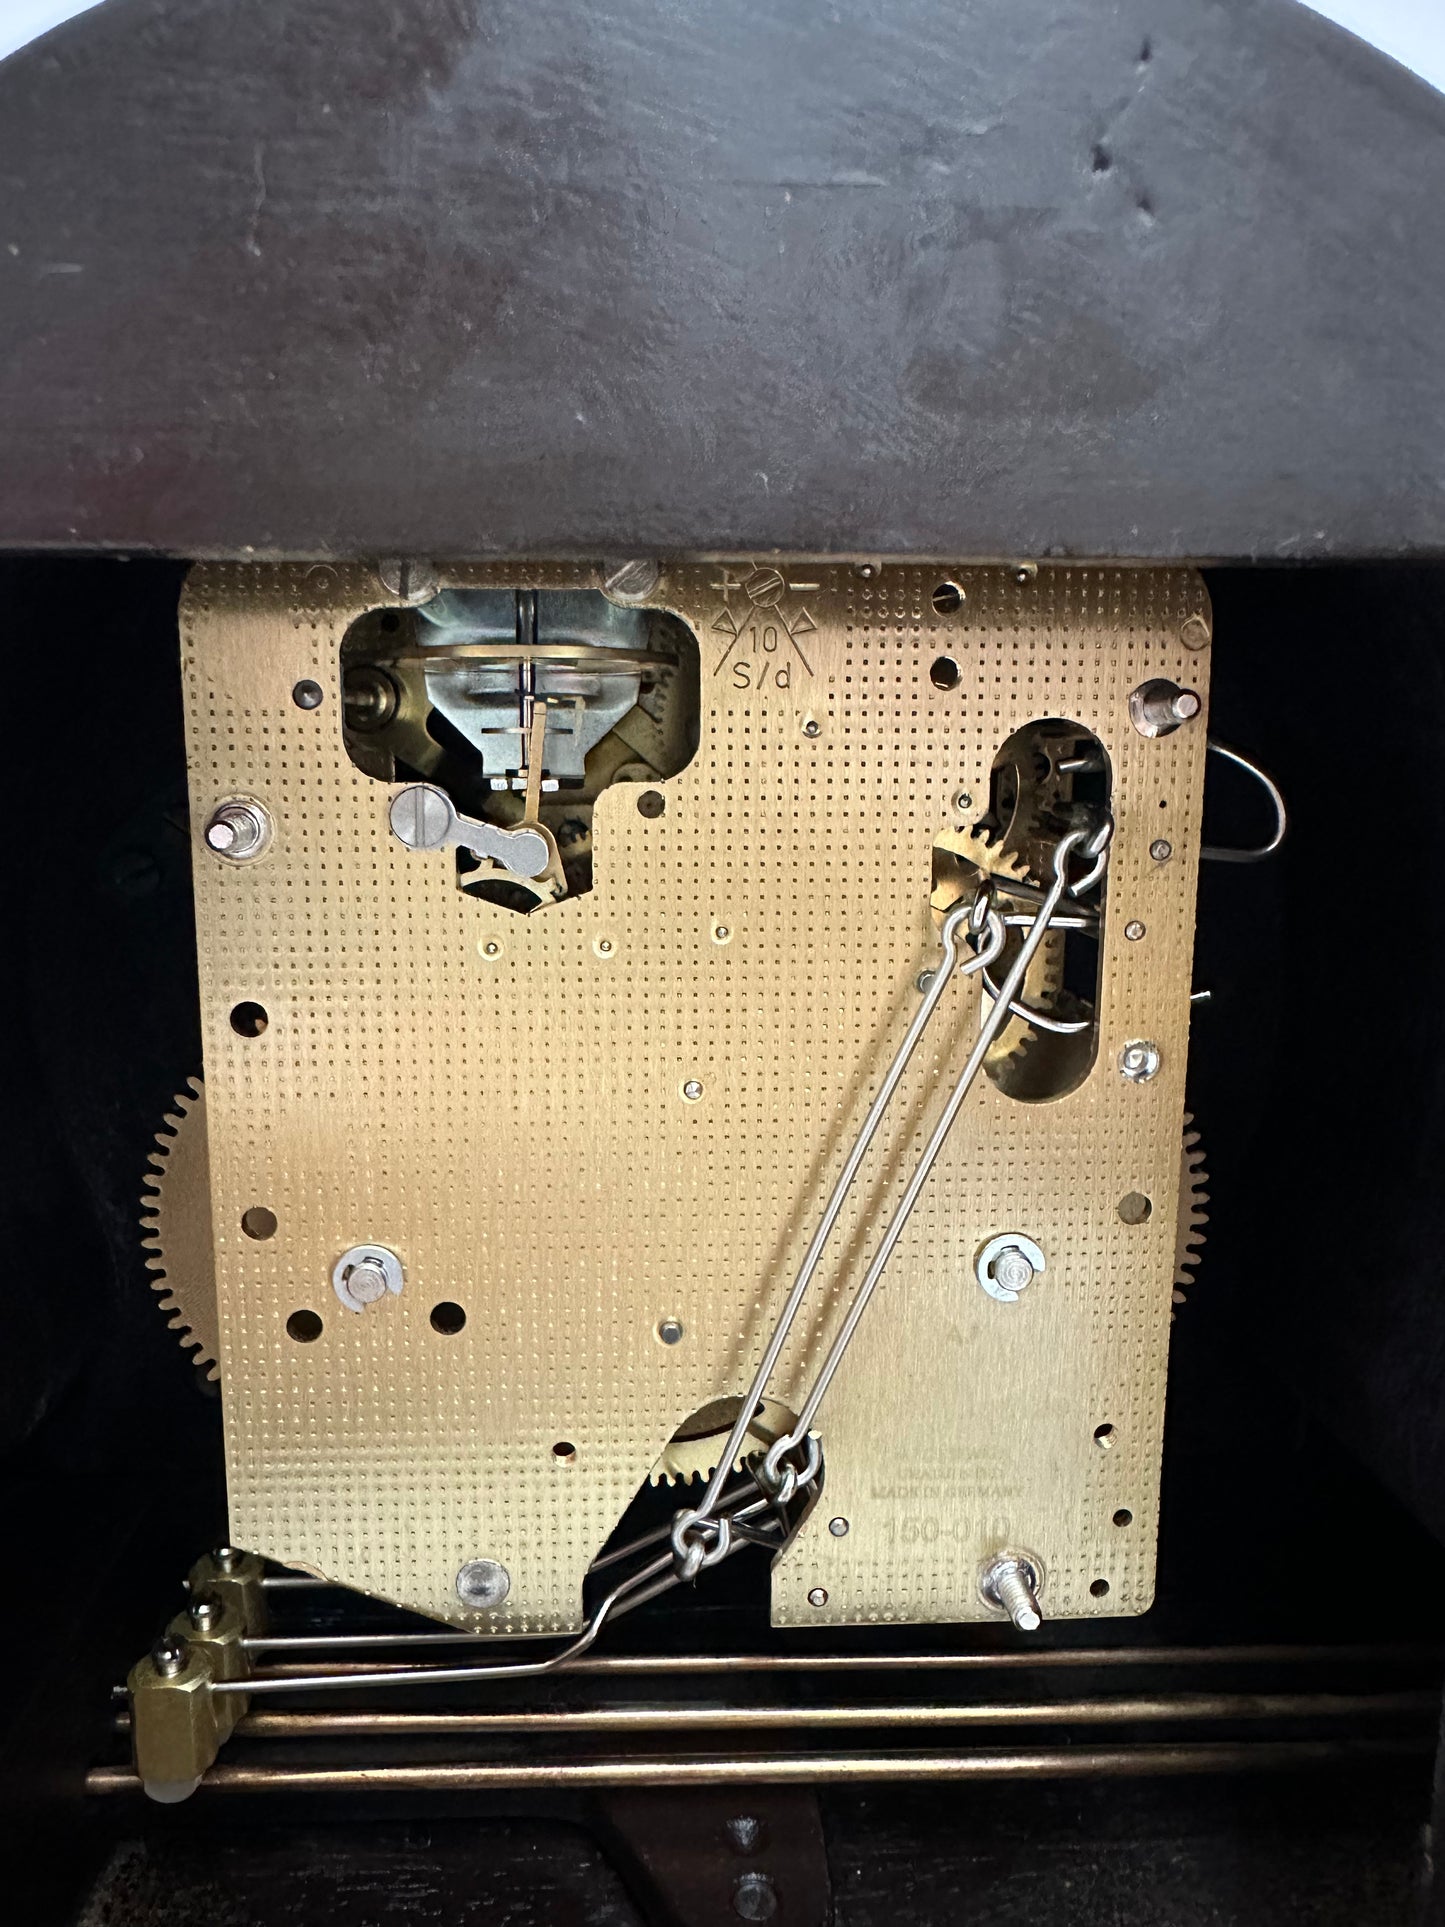 Vintage - Hermle Mid Century Modern Mantel Clock